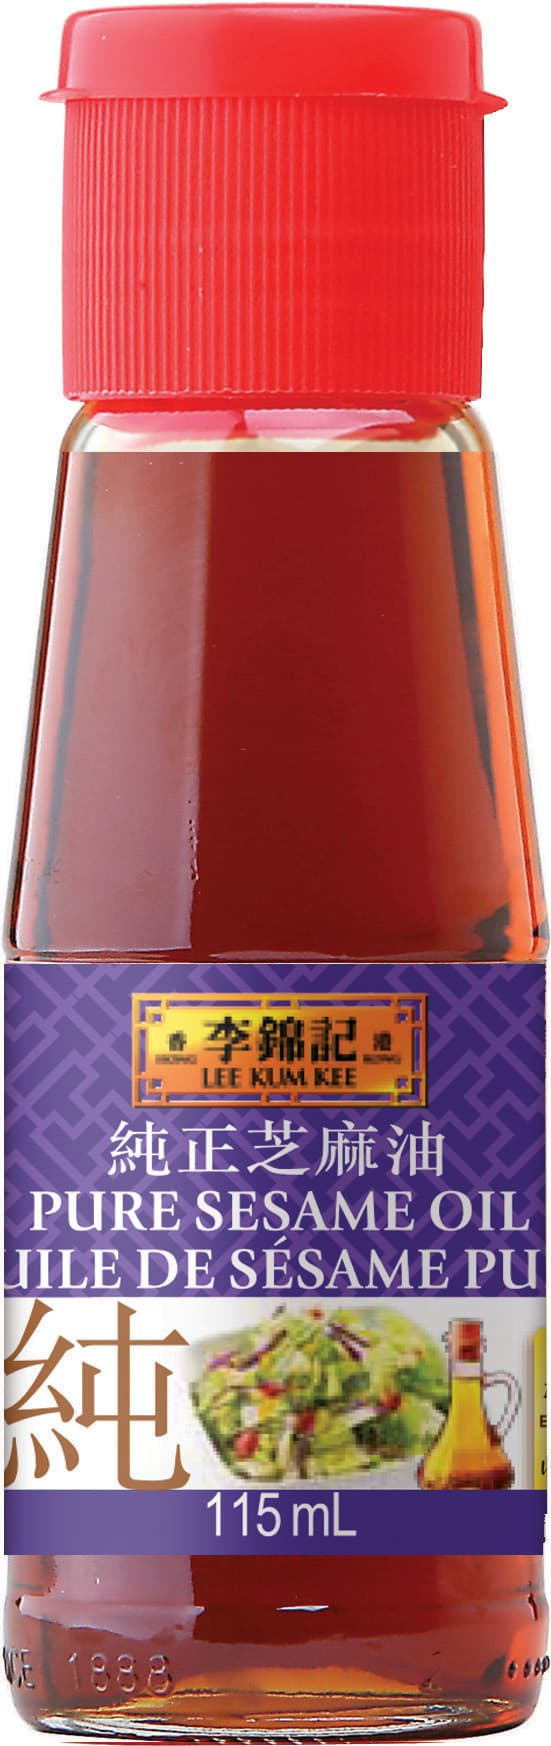 Pure Sesame Oil 115ml 